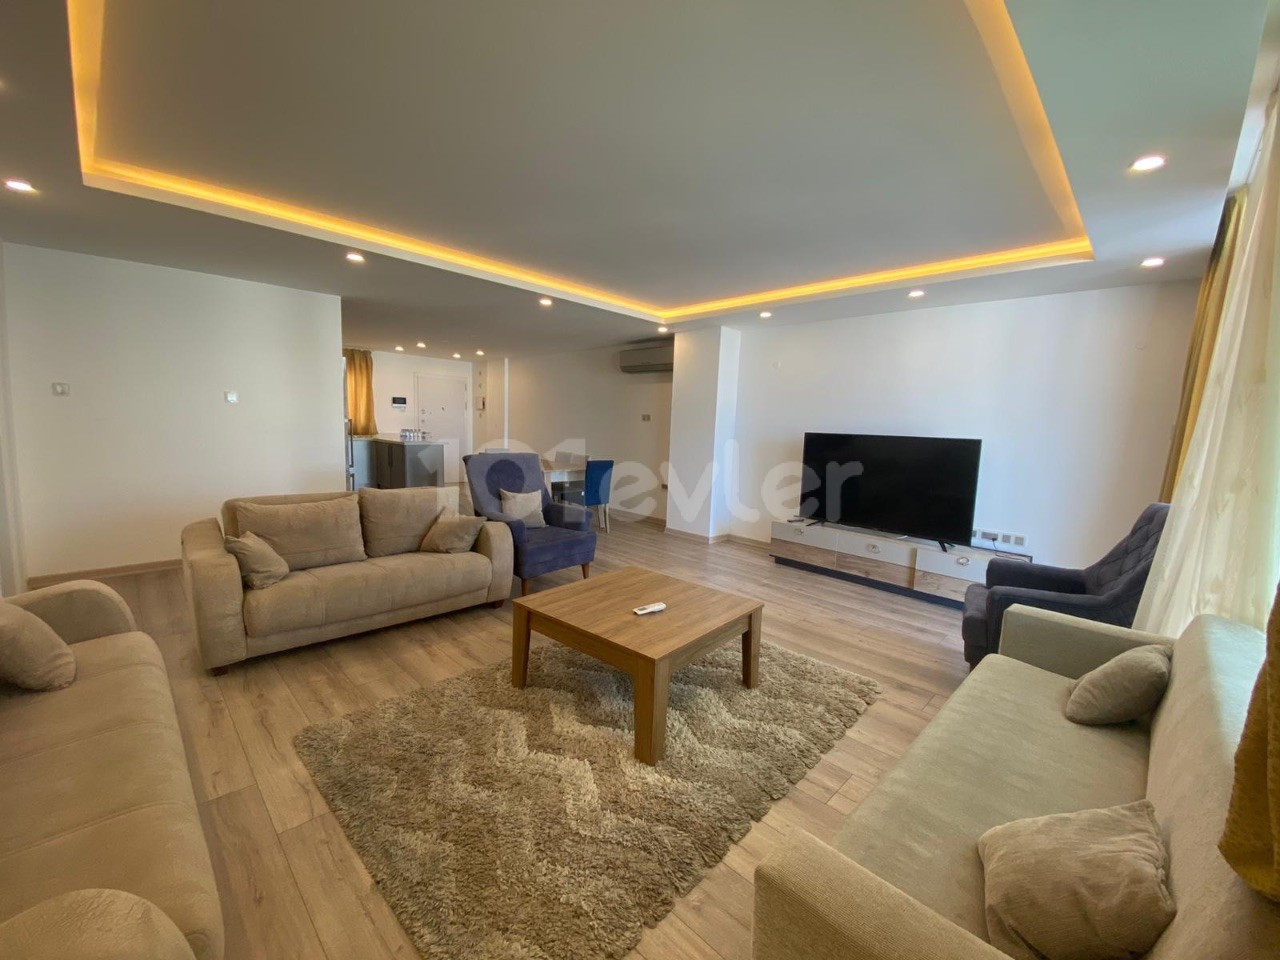 Luxury 3 bedrooms flat for rent in kyrenia 